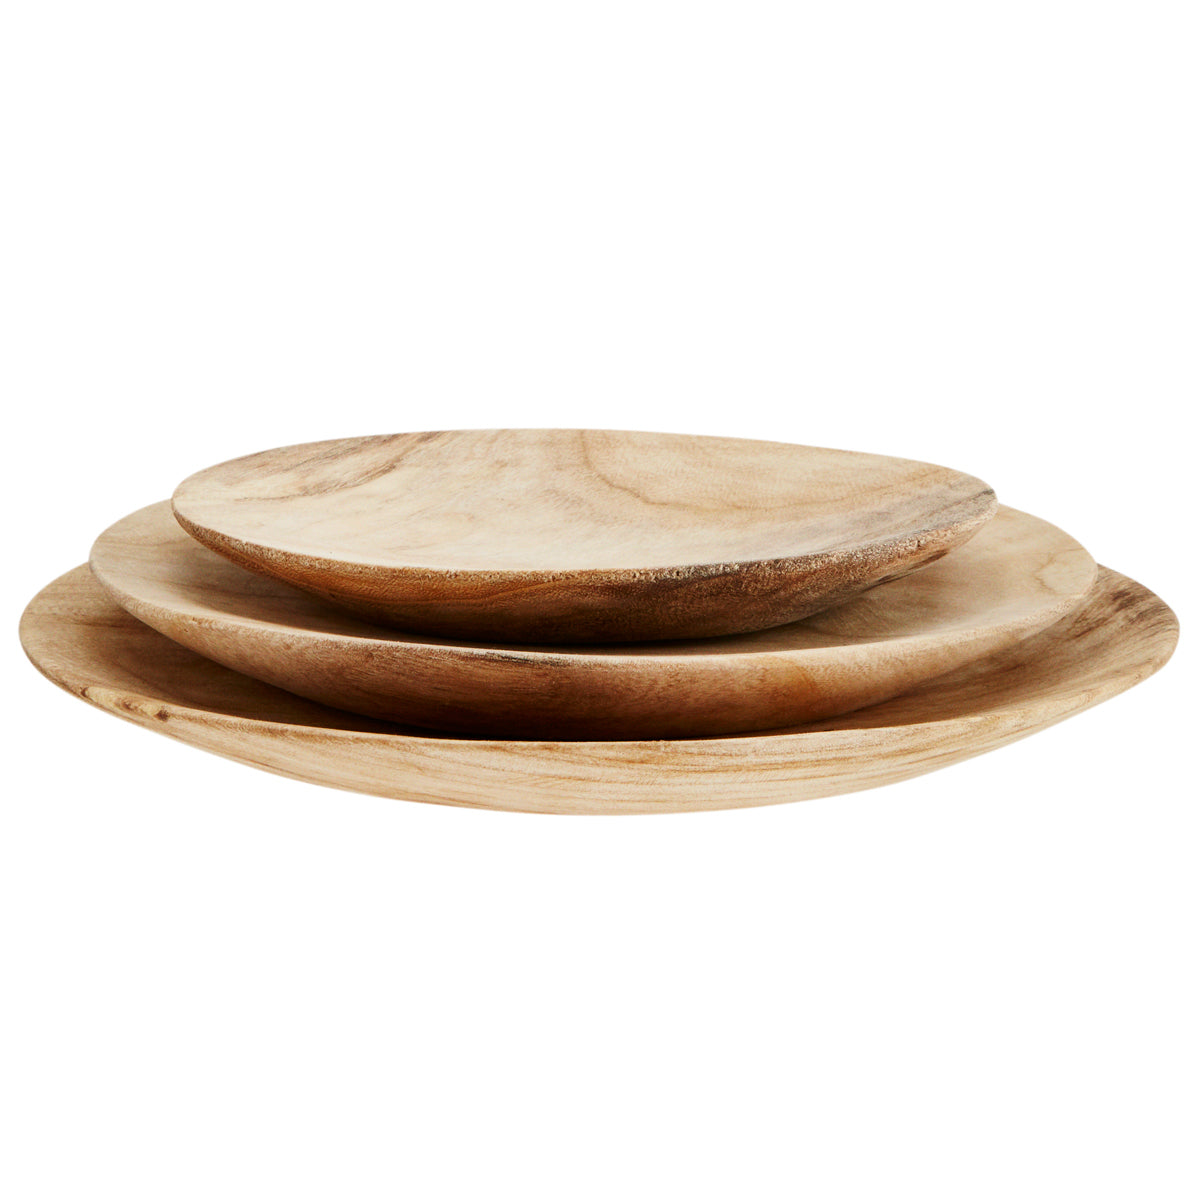 Round Wooden Plates - Set of three